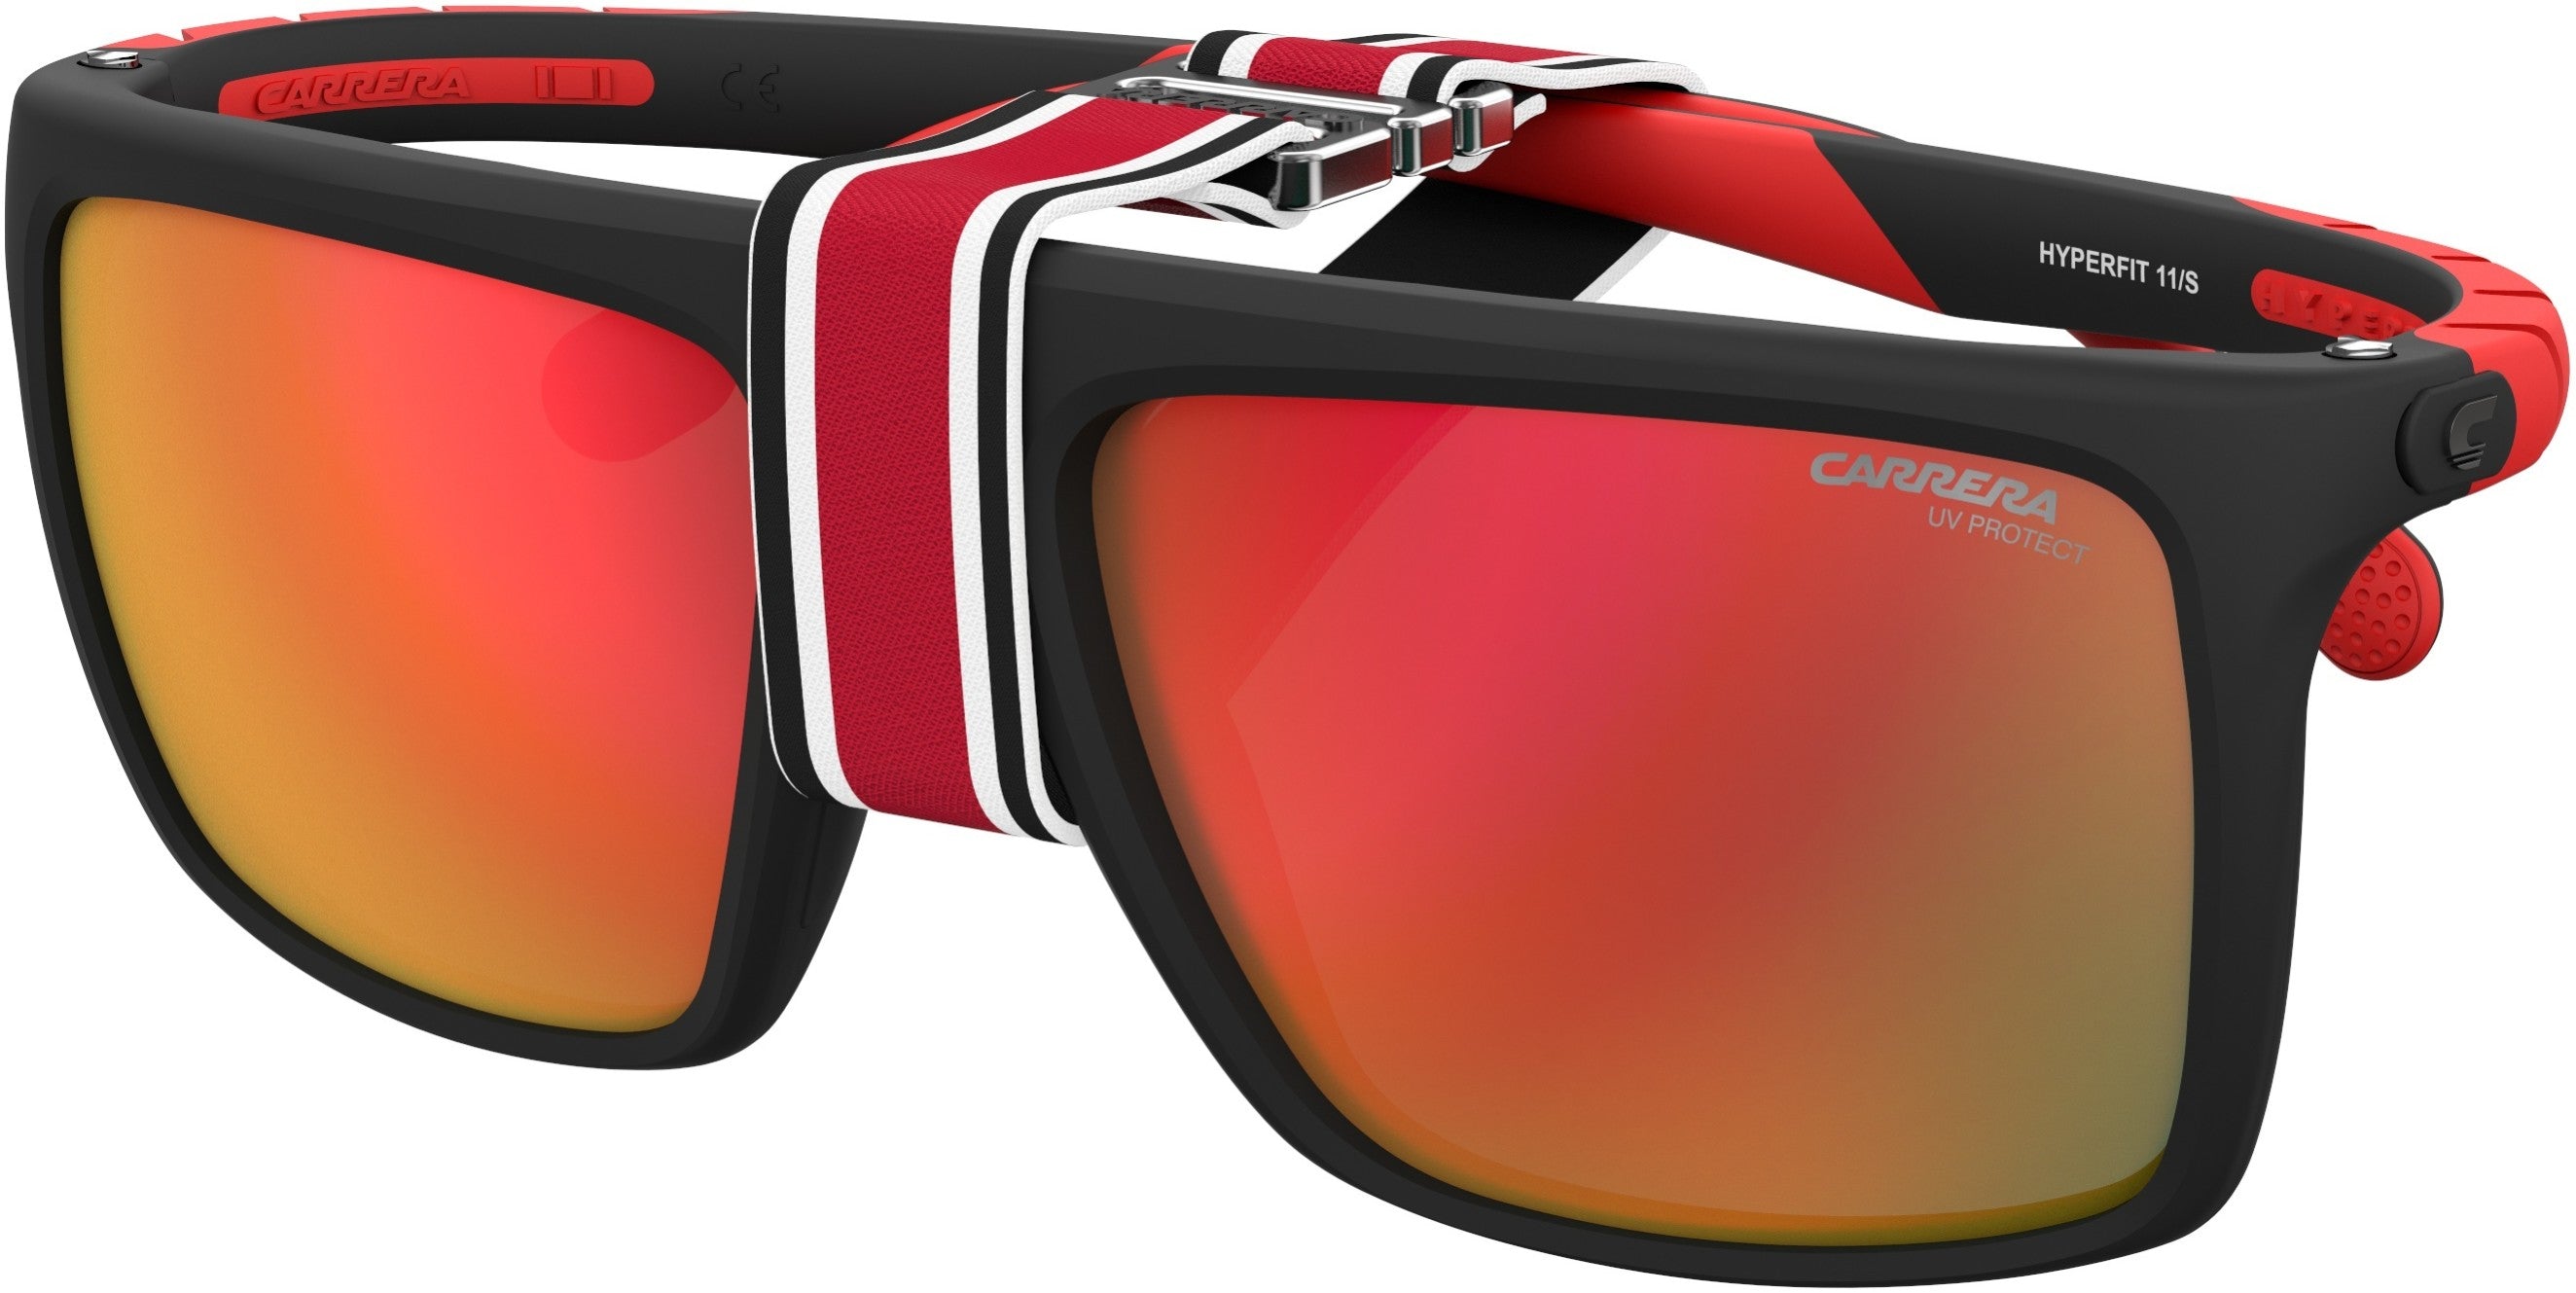 Carrera Hyperfit 11/S Rectangular Sunglasses 0BLX-0BLX  Bkrt Crystal Red (UZ Red Multilayer)